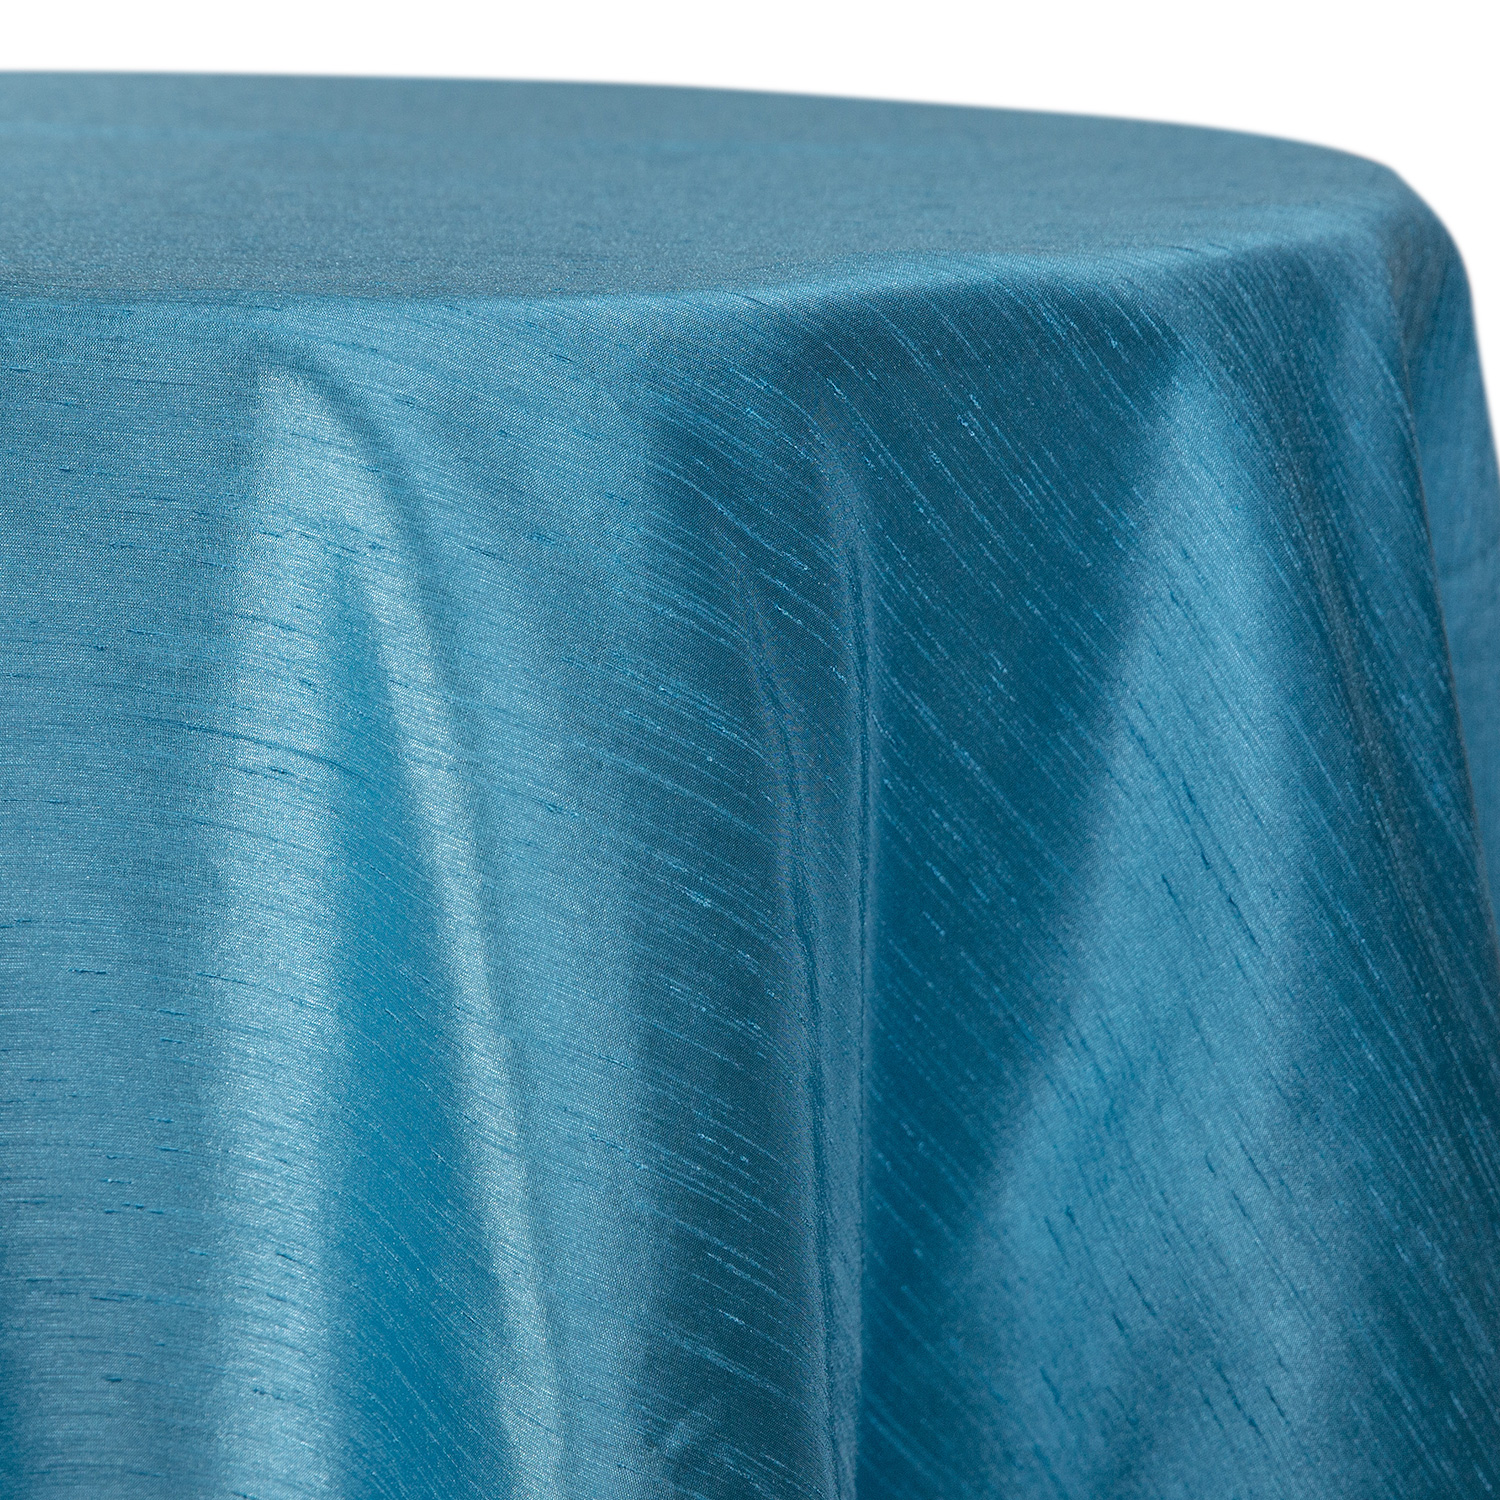 https://www.eventsupply.com/images/big/Turquoise-Shantung-Satin-Capri-Tablecloth-1.jpg